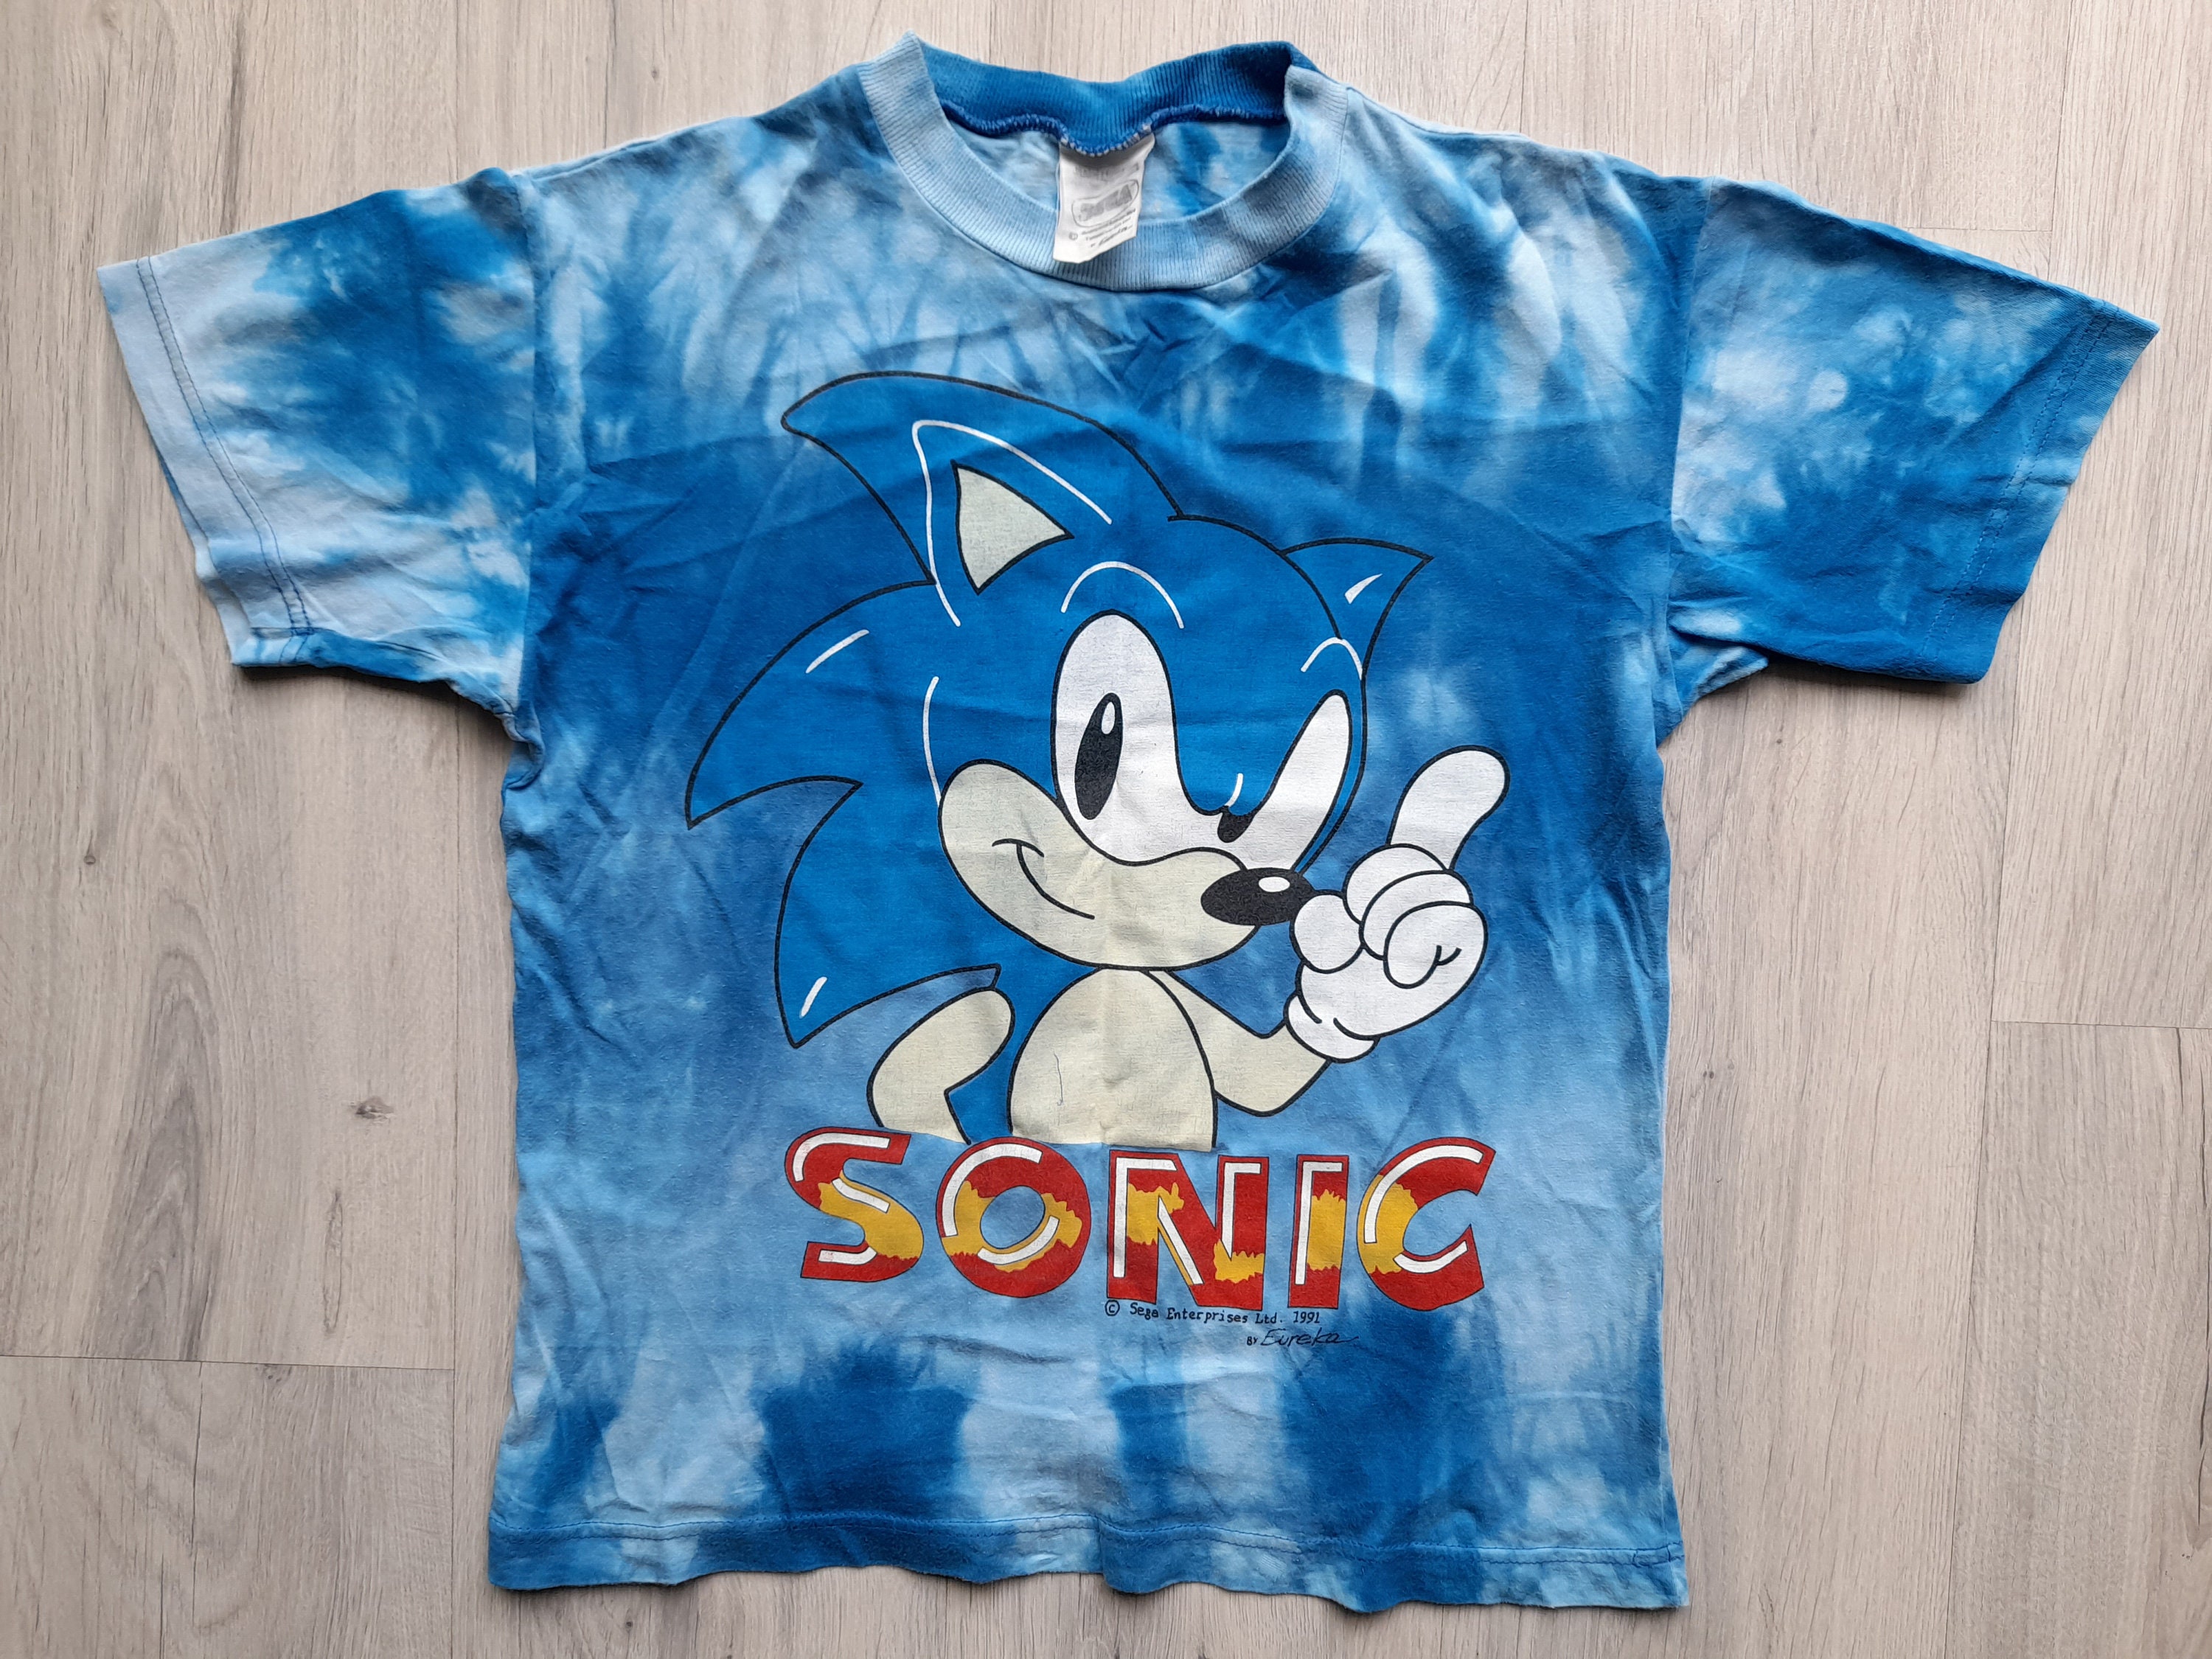 Kleding Jongenskleding Tops & T-shirts T-shirts T-shirts met print Anime tshirt sonic hedgehog door sega spel 